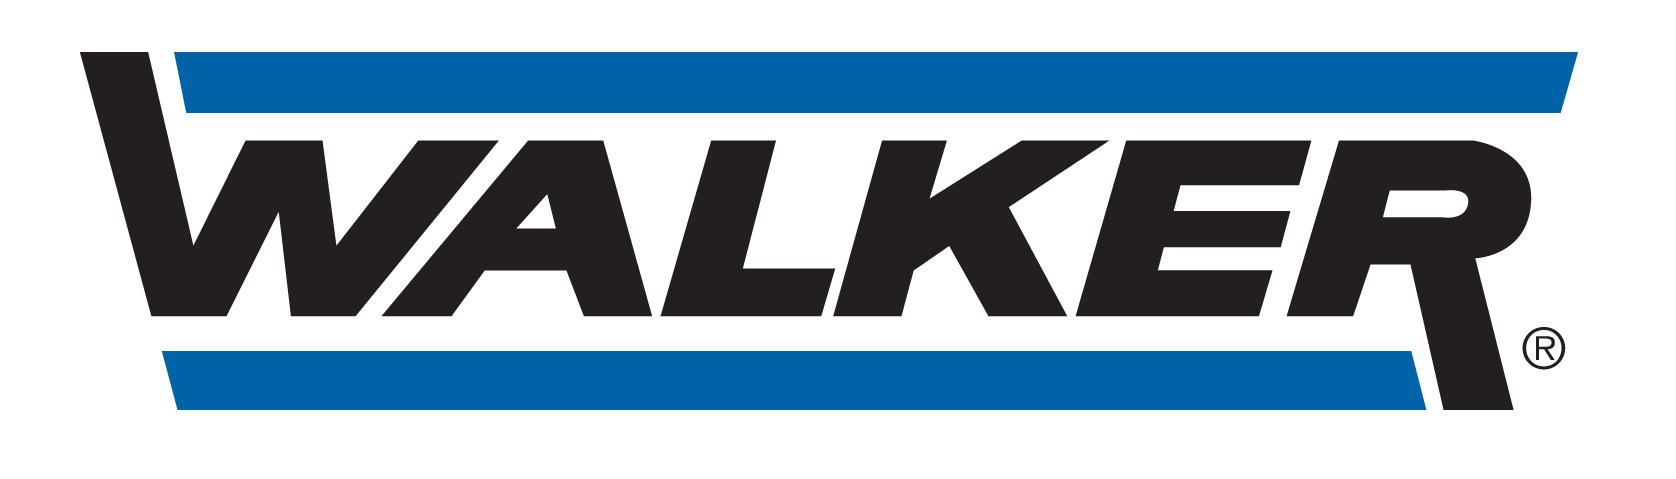 KENDAL CAR - logo Walker